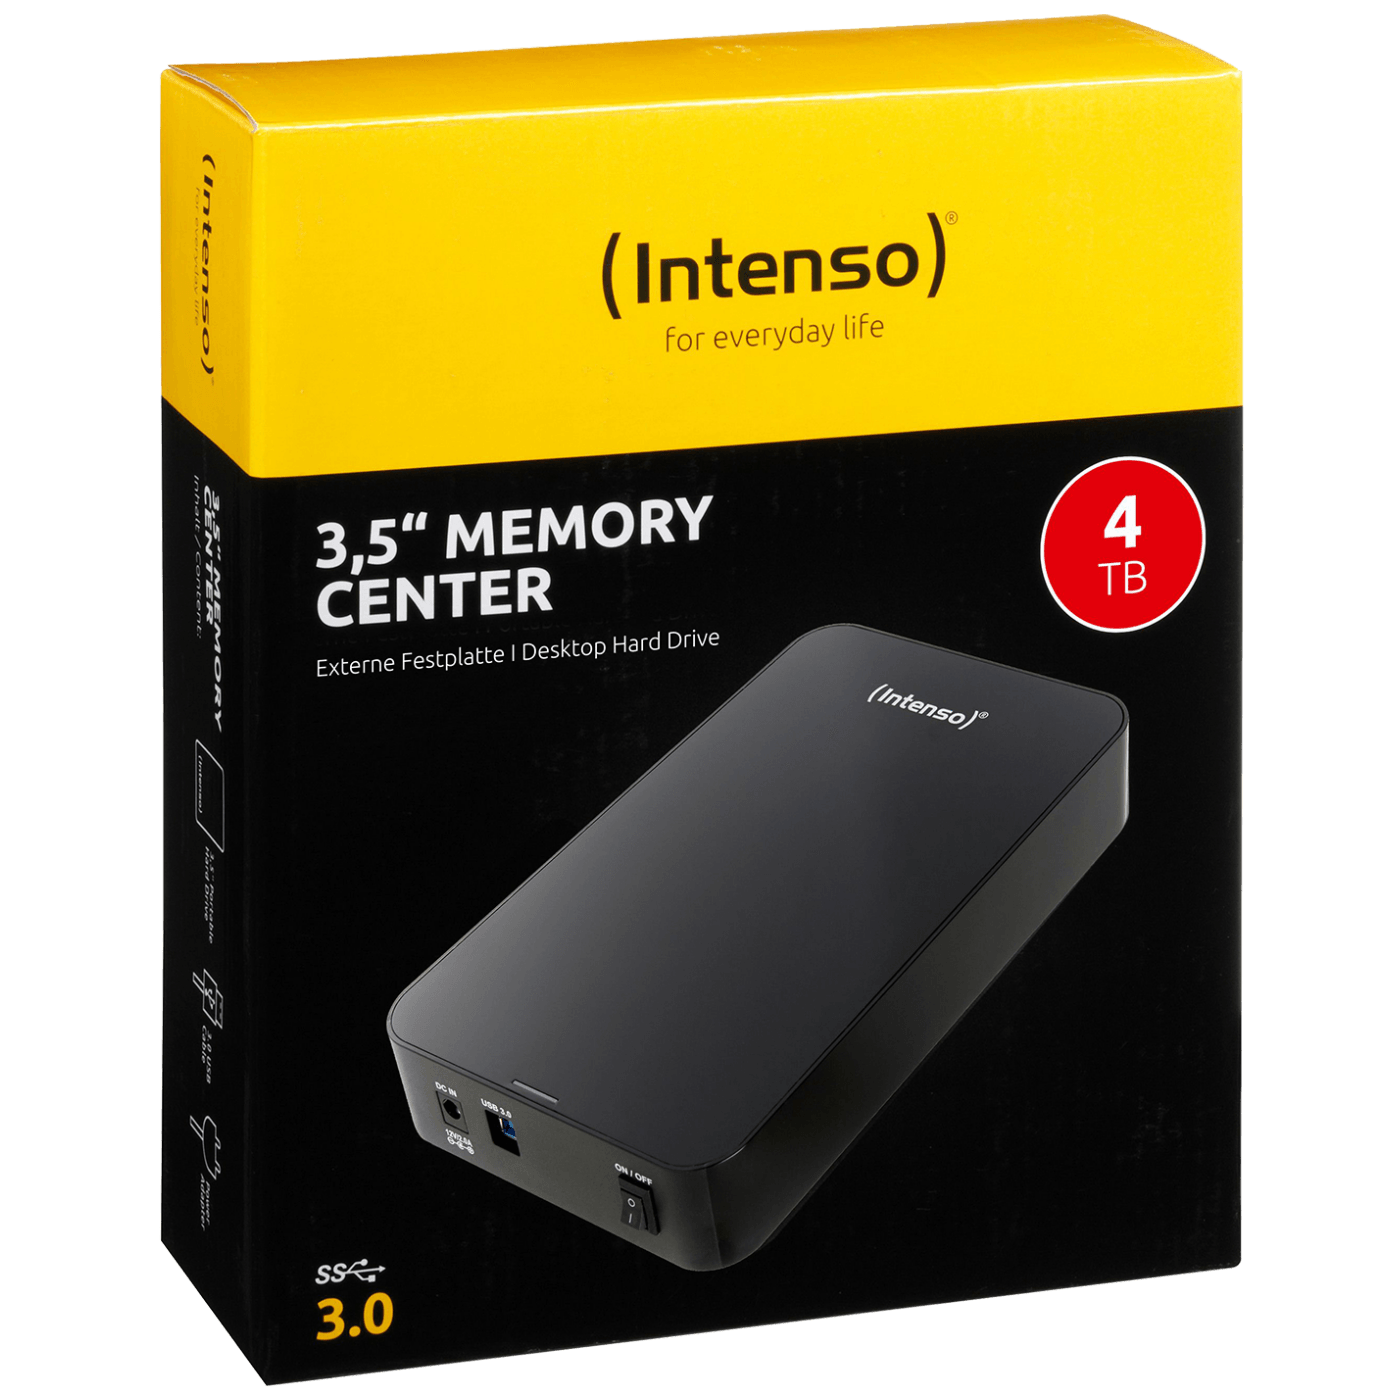 HDD3.0-4TB/Memory-center